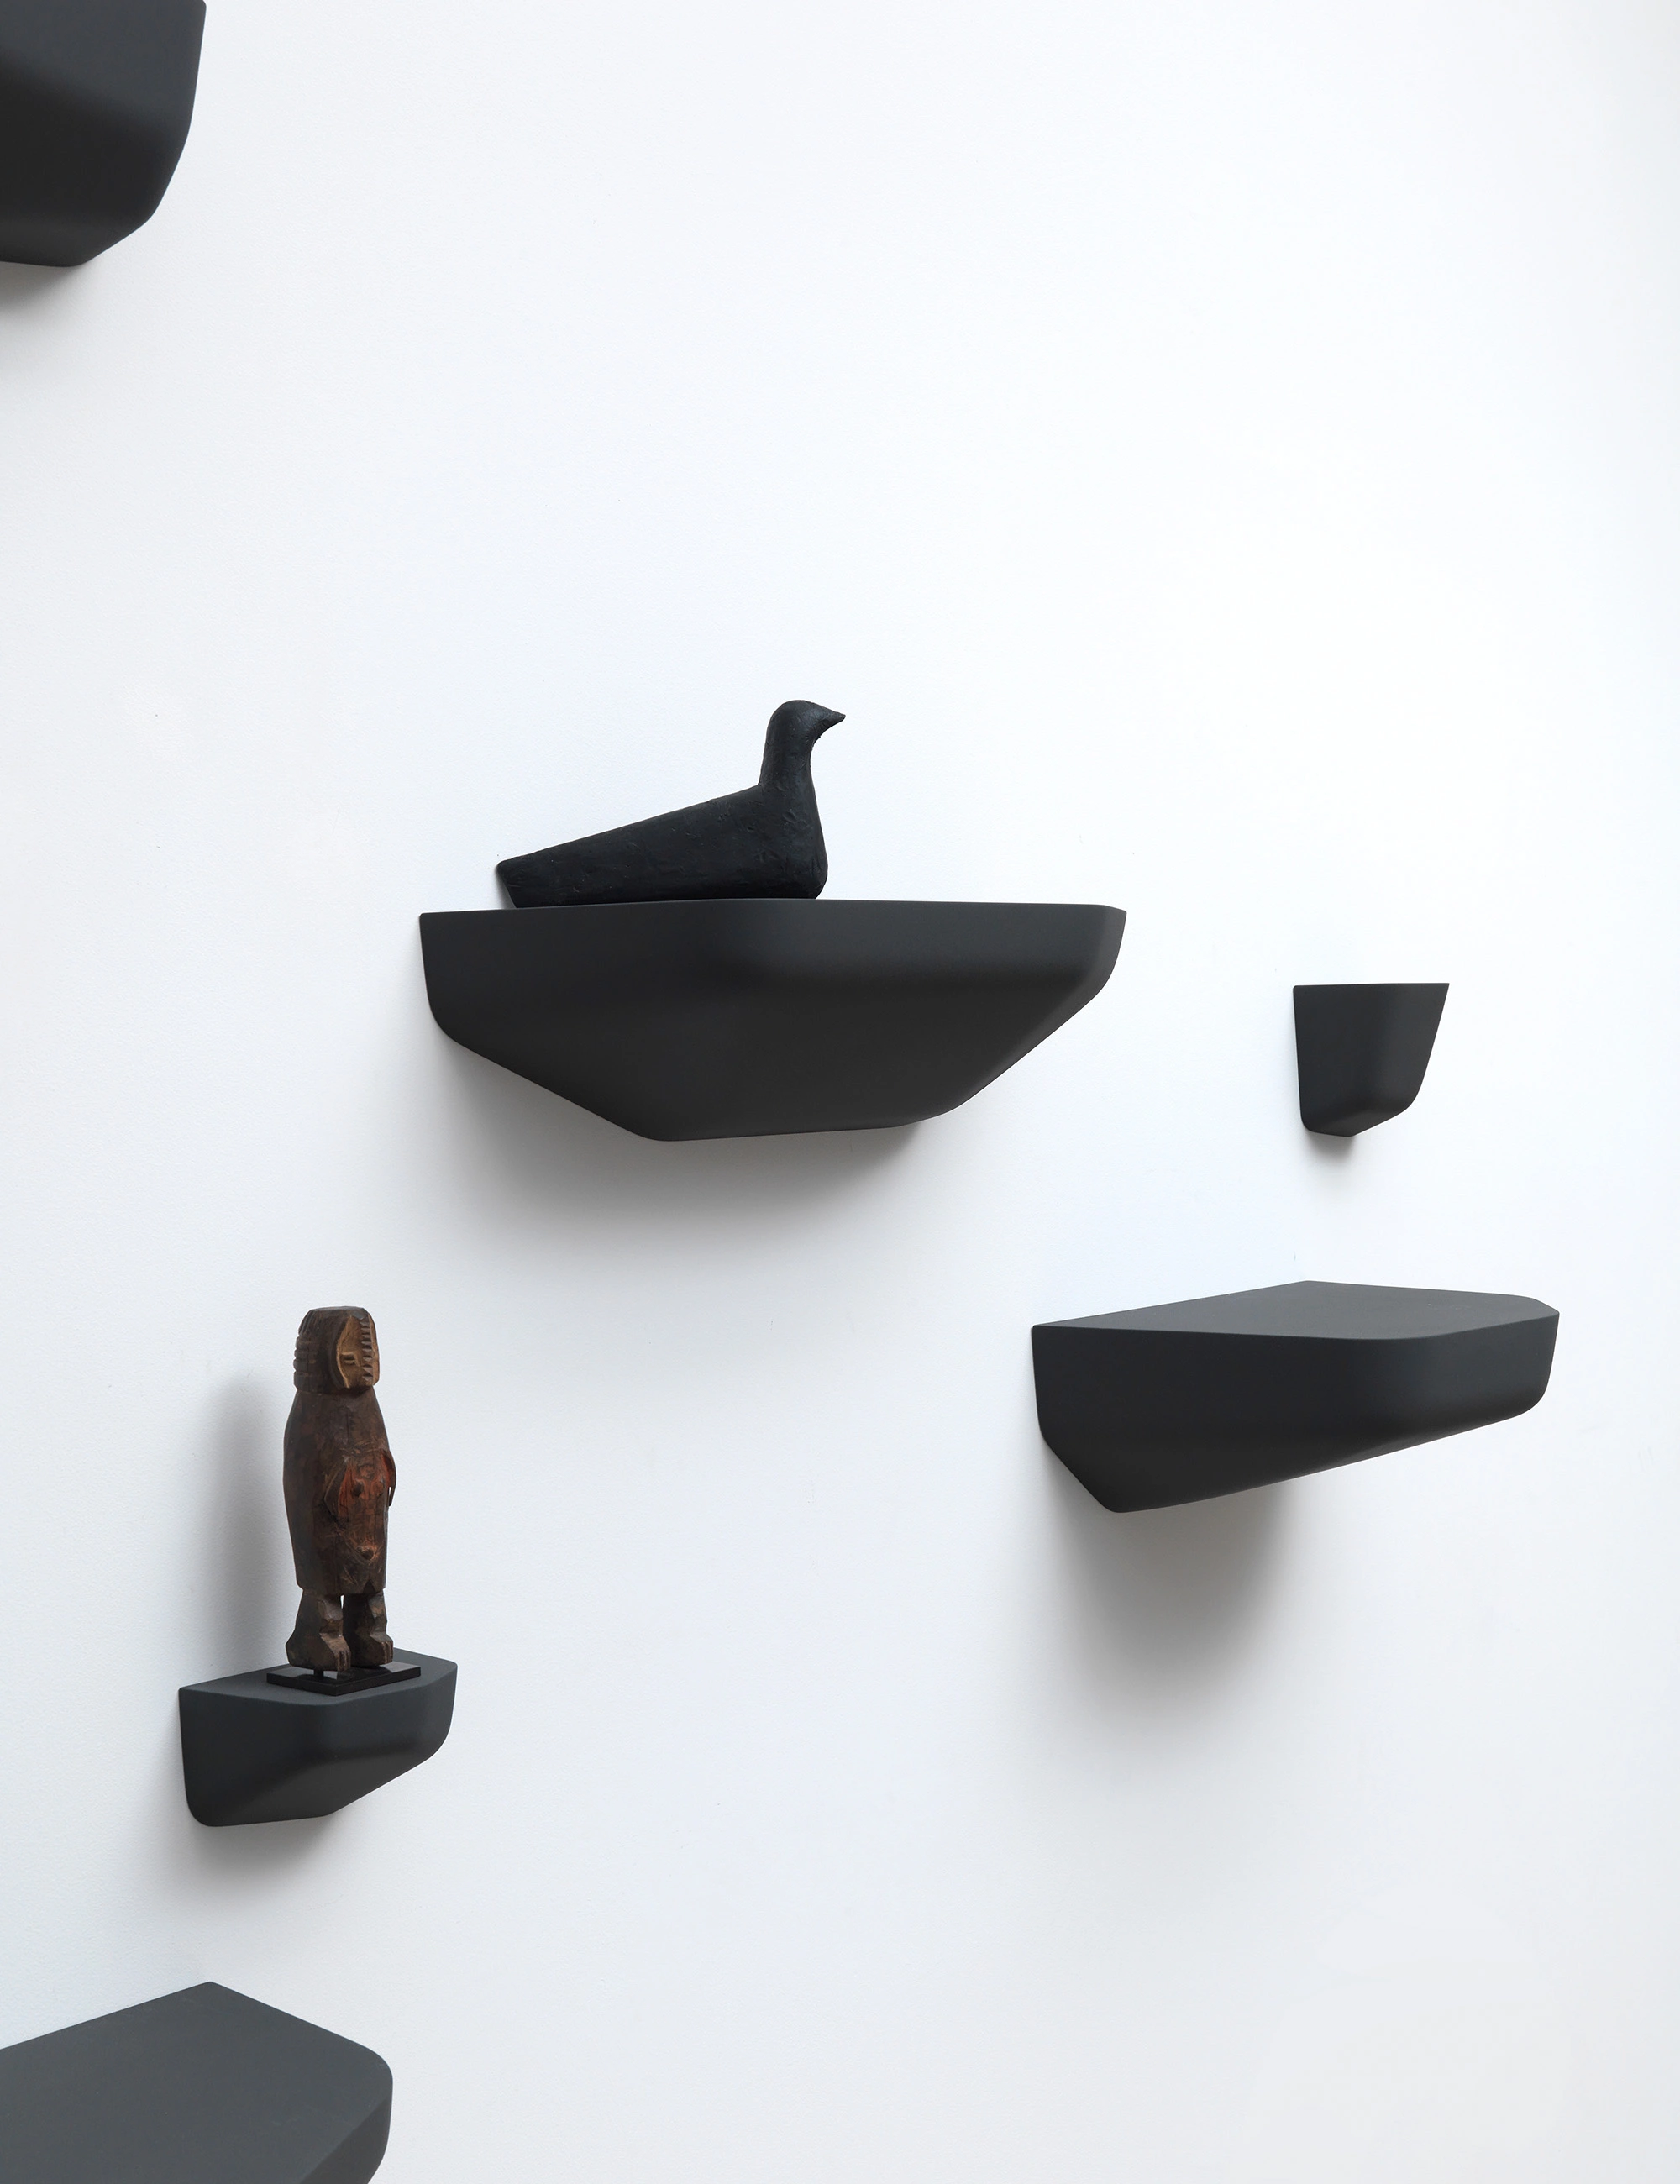 Roches 8 - Ronan & Erwan Bouroullec - Shelf - Galerie kreo